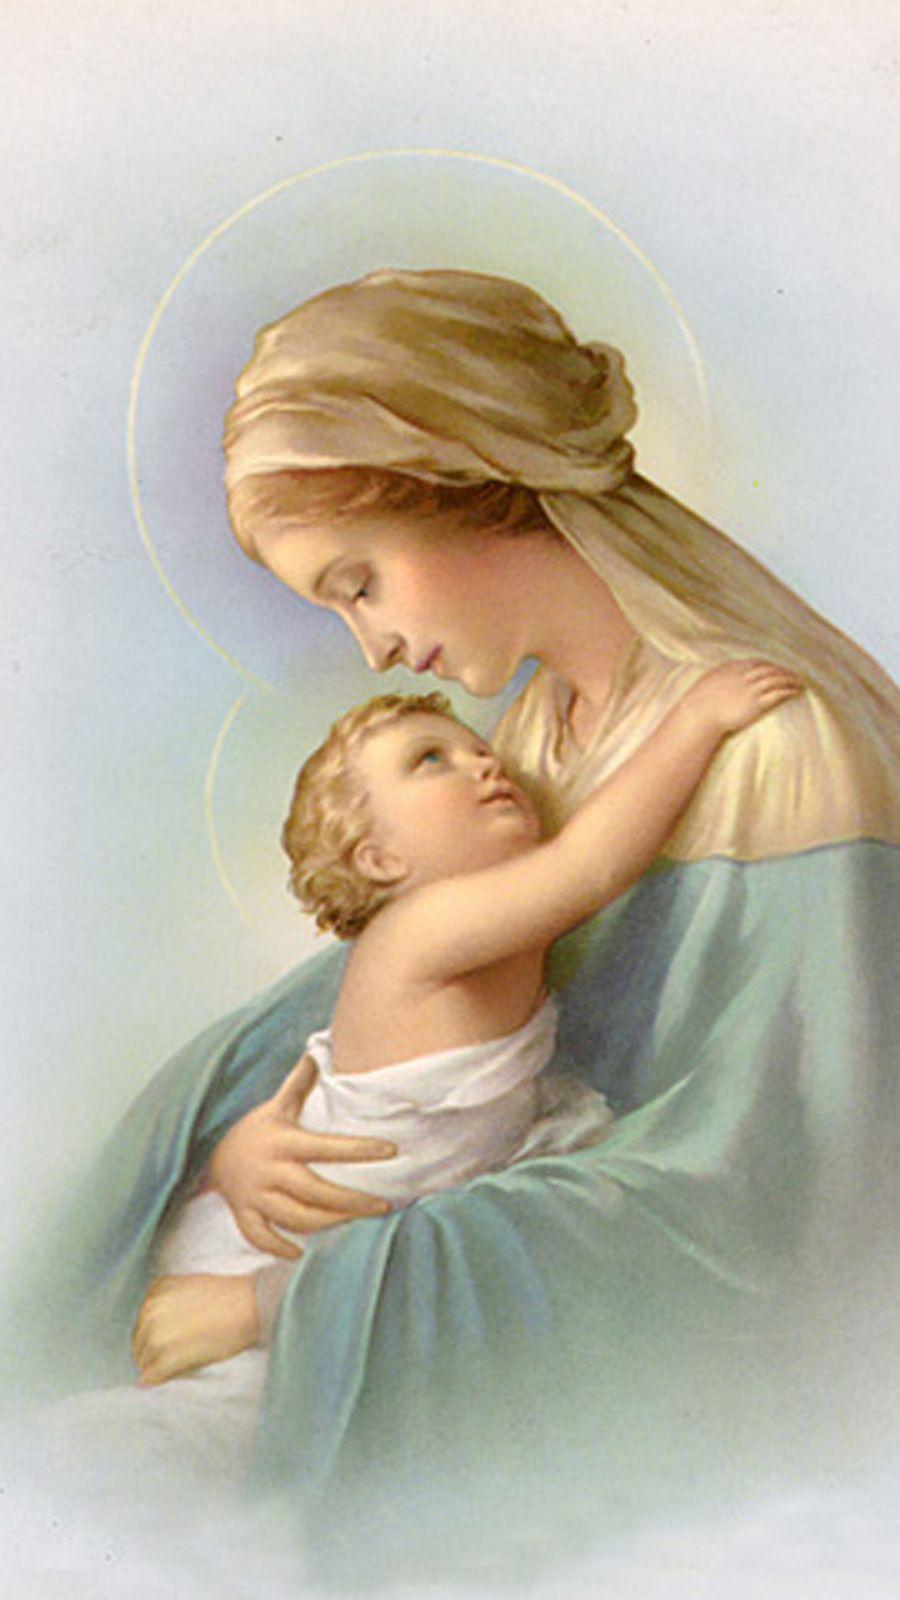 Virgin Mary holding Jesus Samsung Galaxy S5 Wallpaper. The Slave